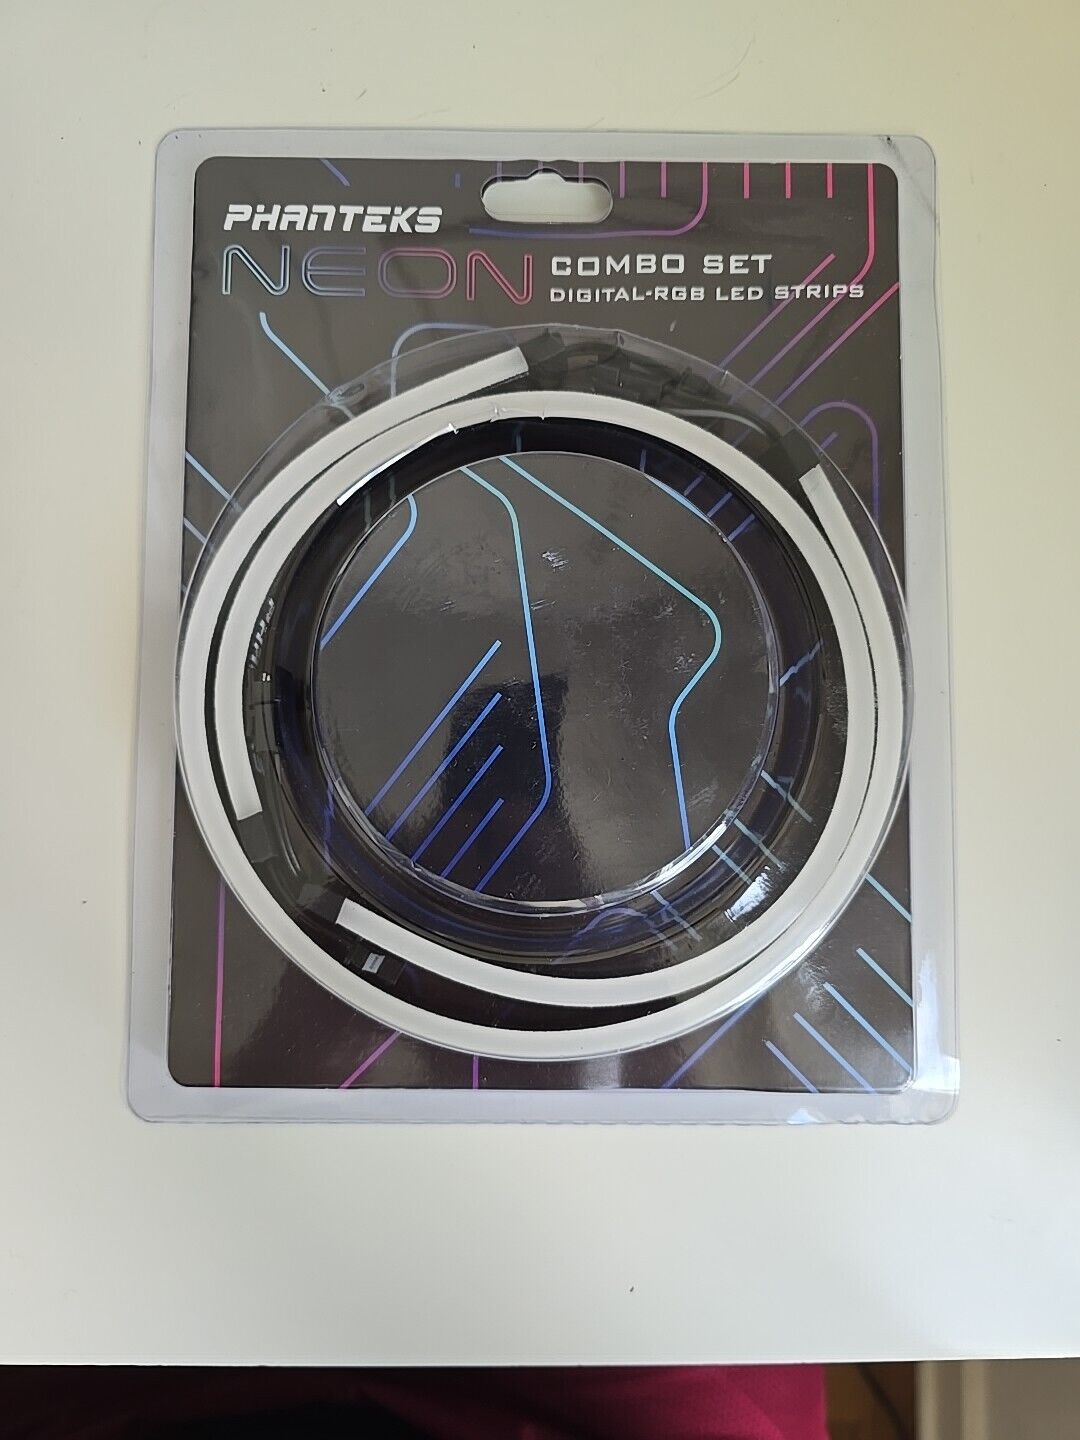 Phanteks Neon Combo Set Digital RGB LED Strips